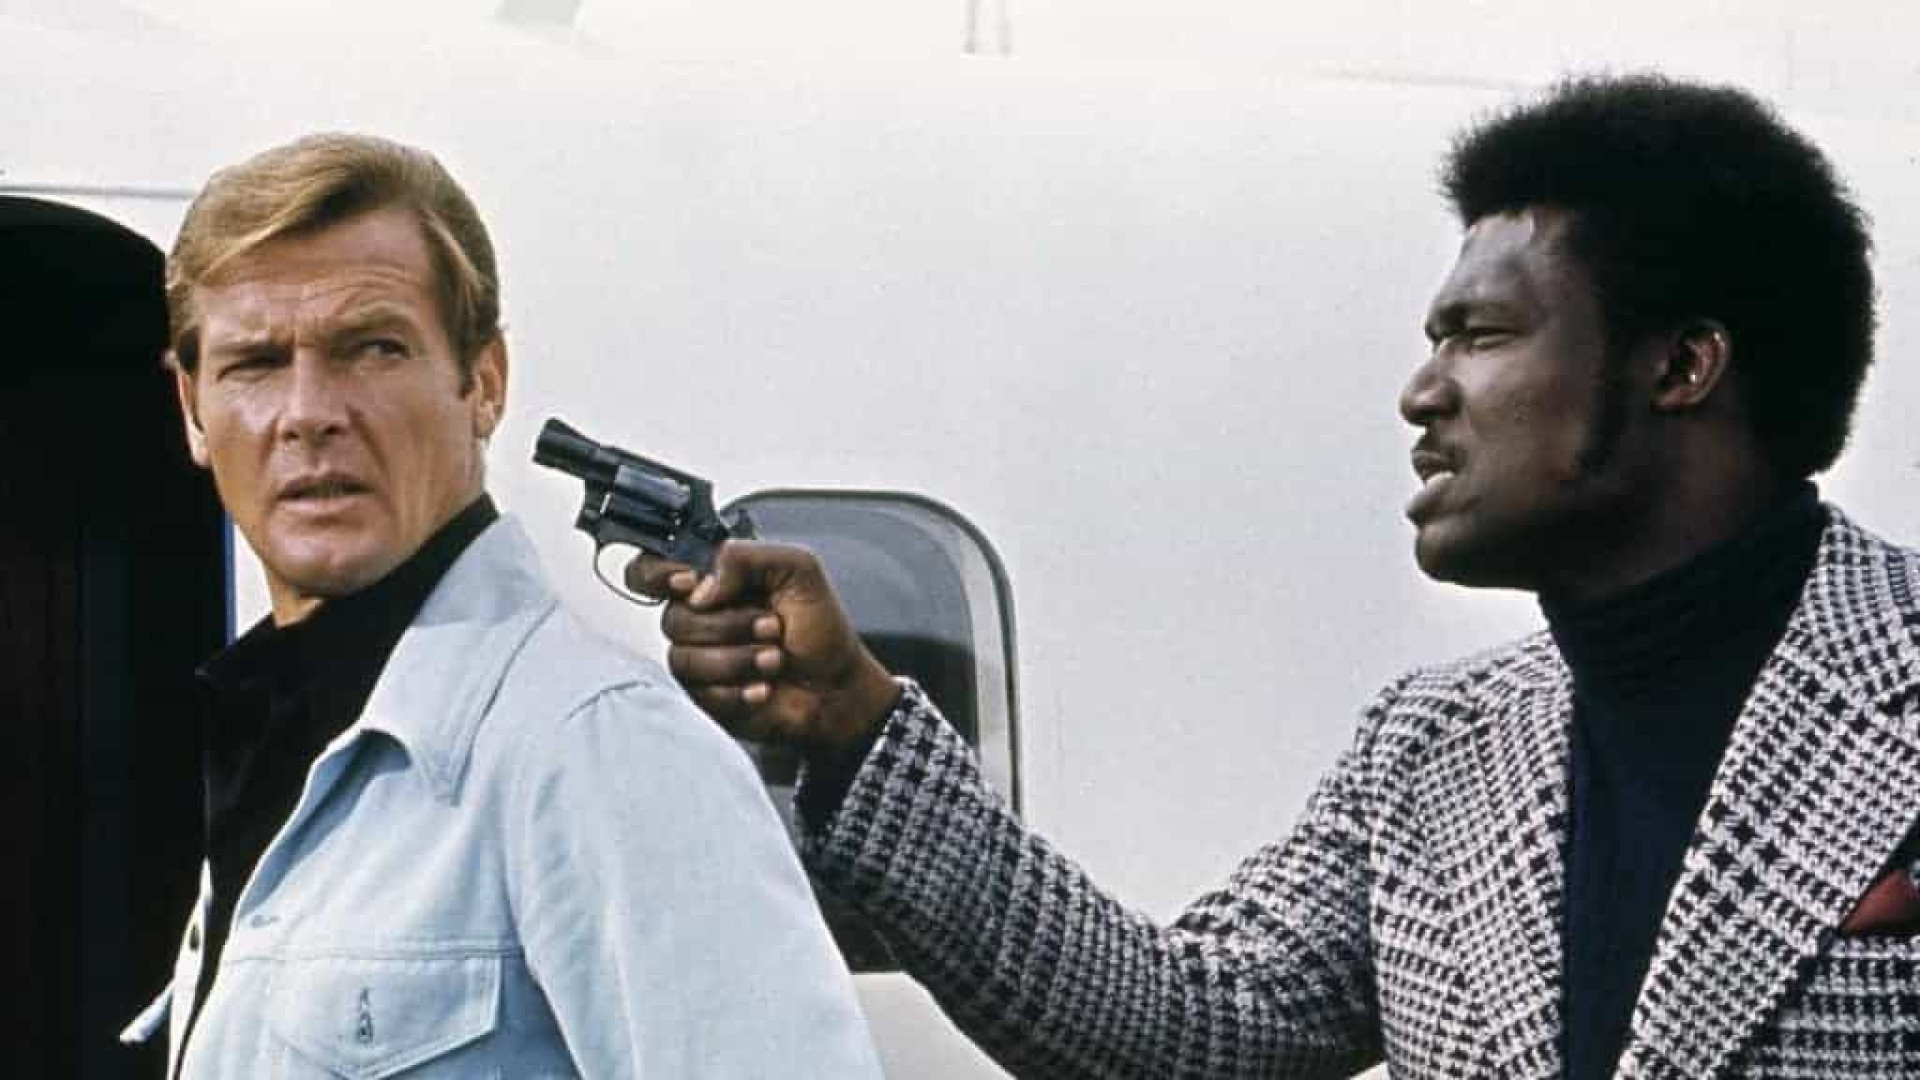 Morre Tommy Lane, ator de '007 - Vive e Deixa Morrer' e 'Shaft'